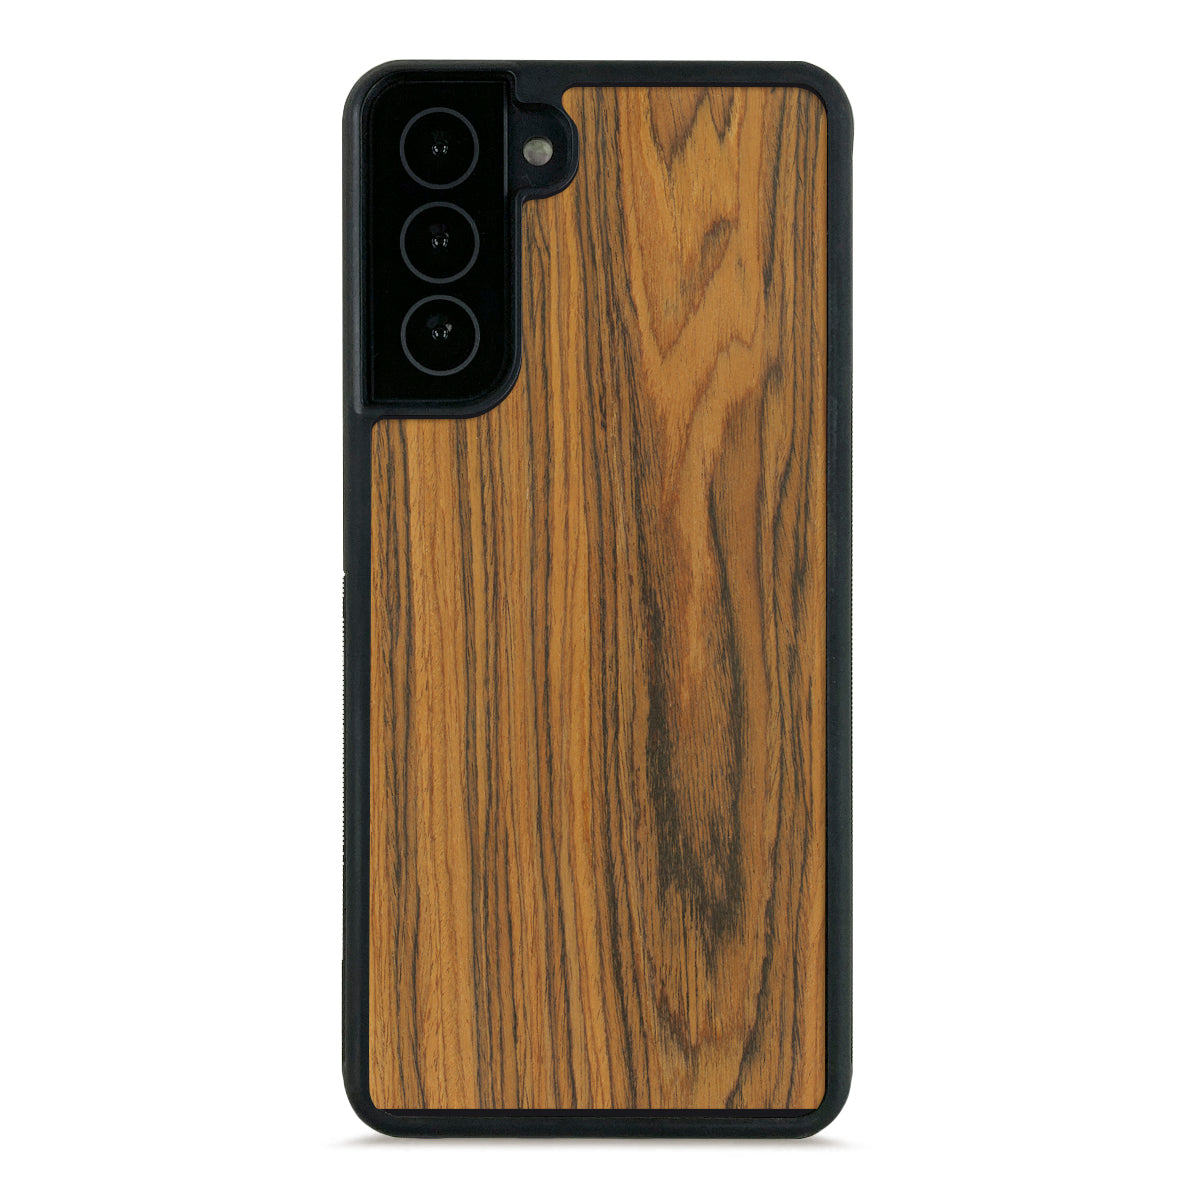 Samsung Galaxy S21 — #WoodBack Explorer Case